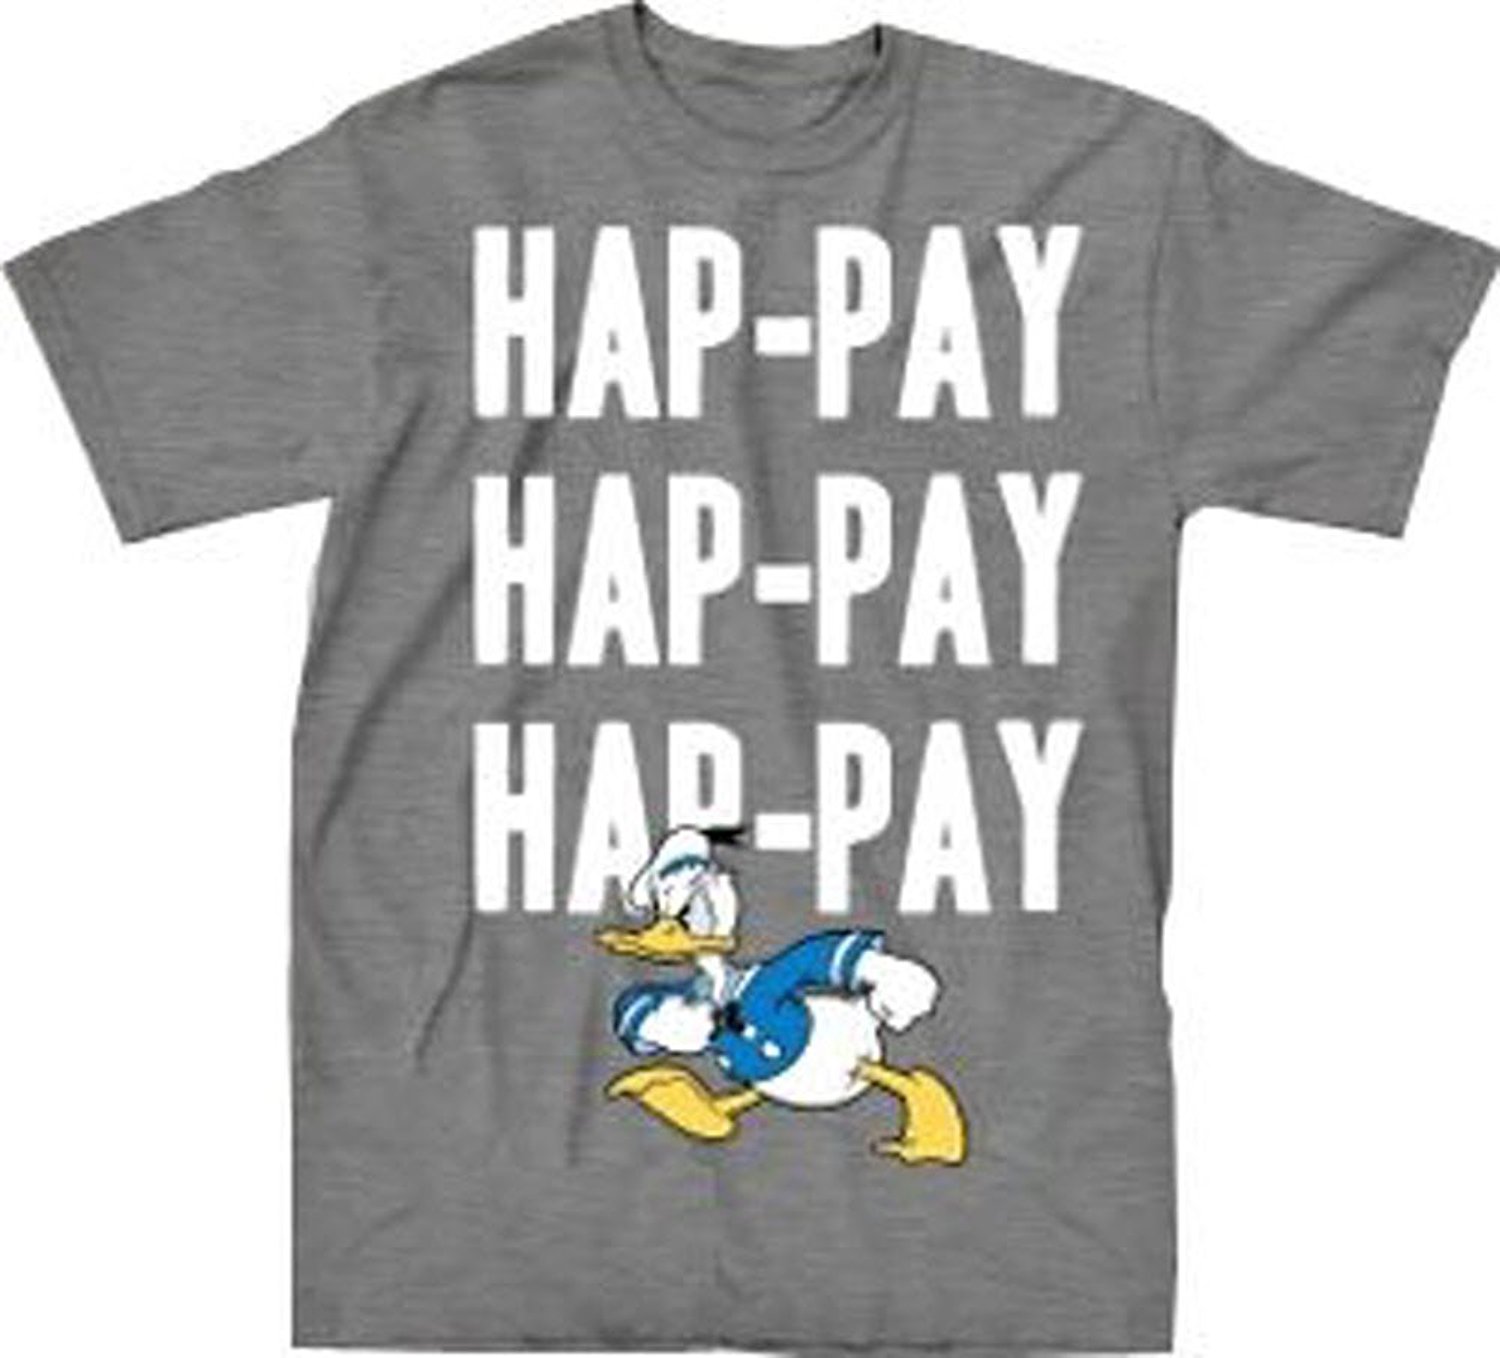 Happy Duck Dynasty T-Shirt : Hap-pay Hap-pay Hap-pay